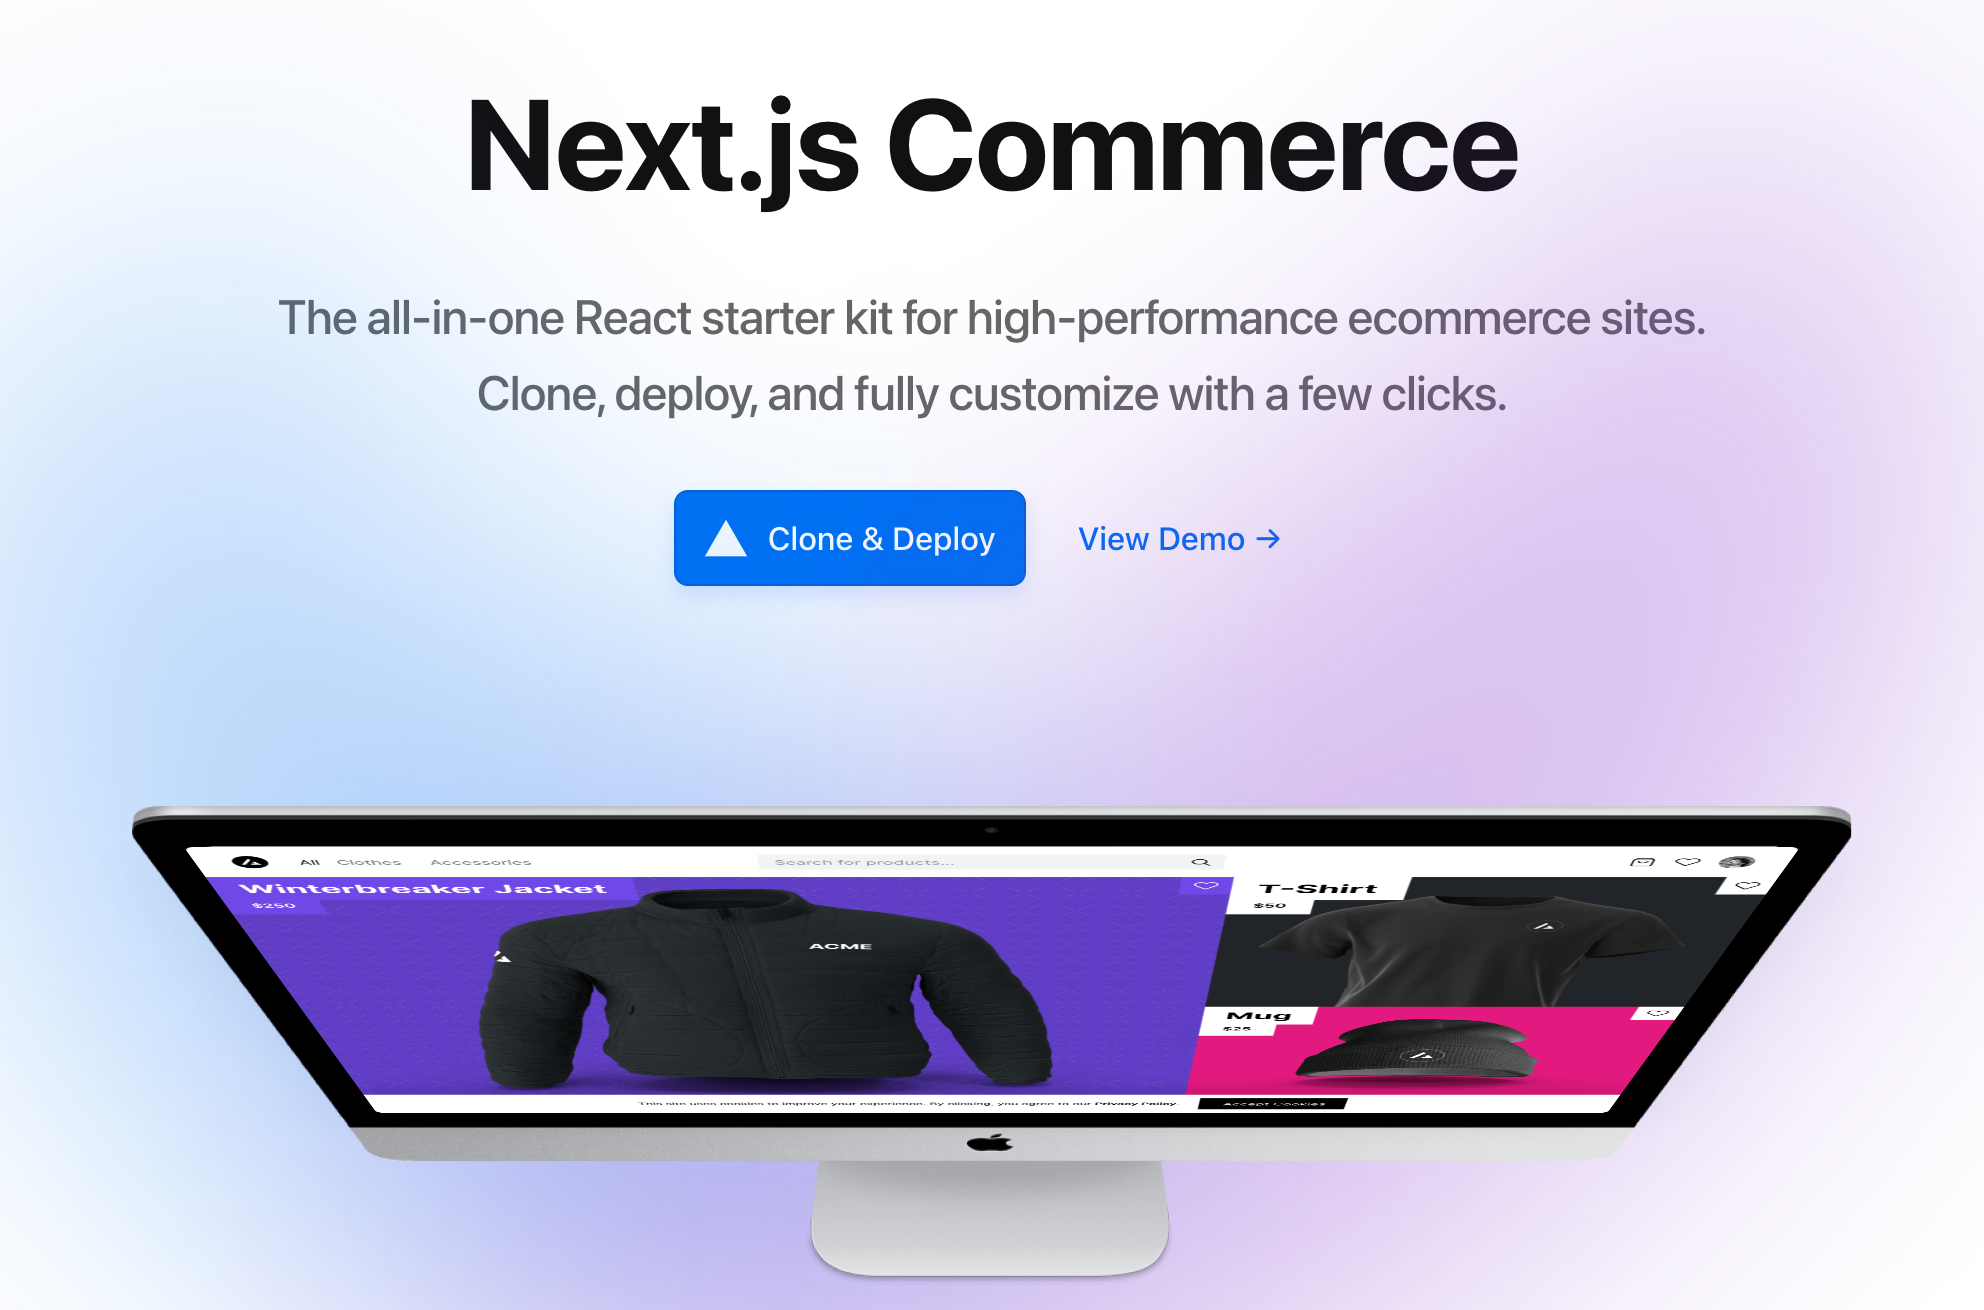 Next.js commerce on agilitycms.com